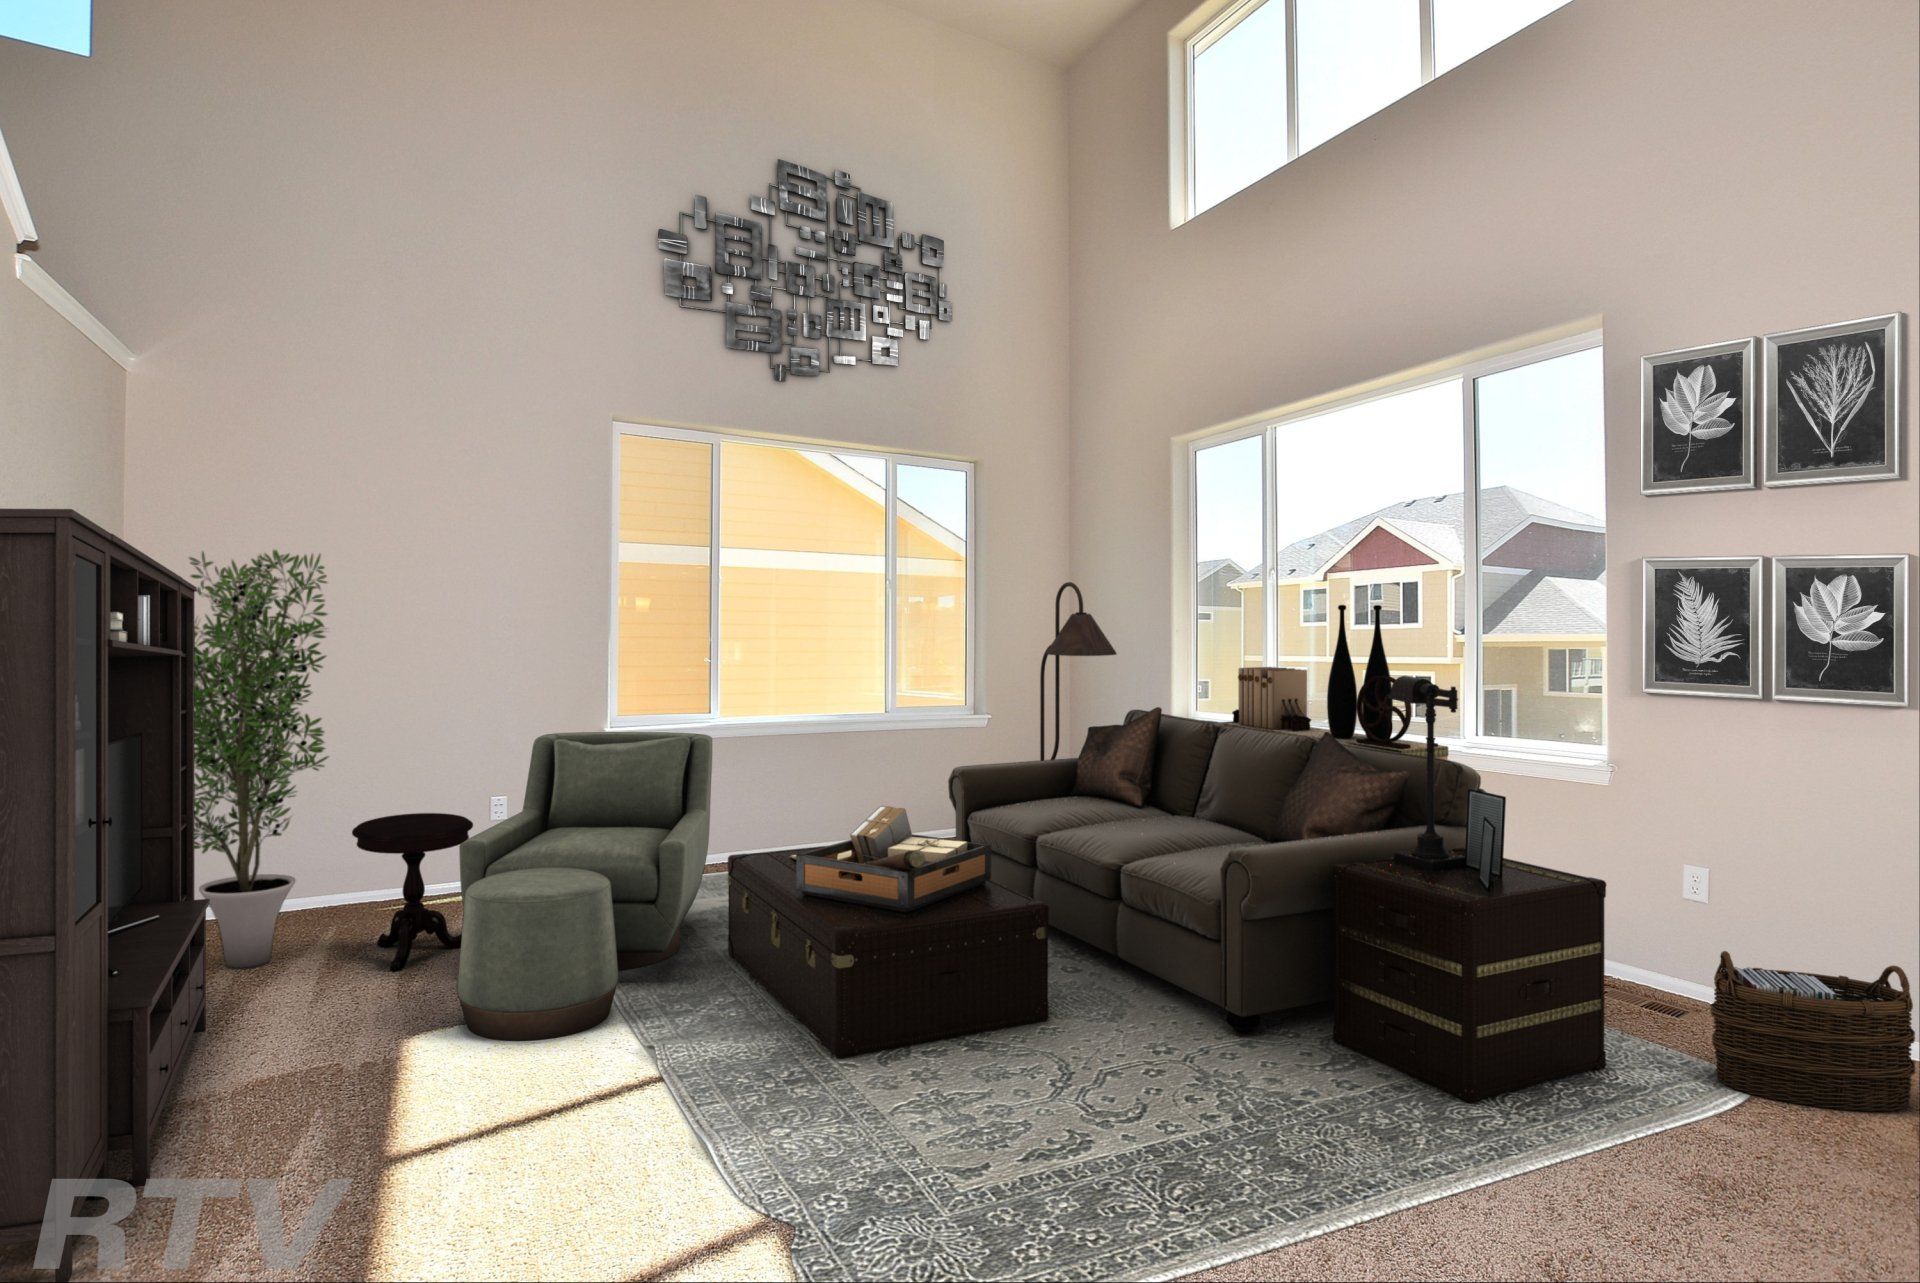 The Saratoga living room